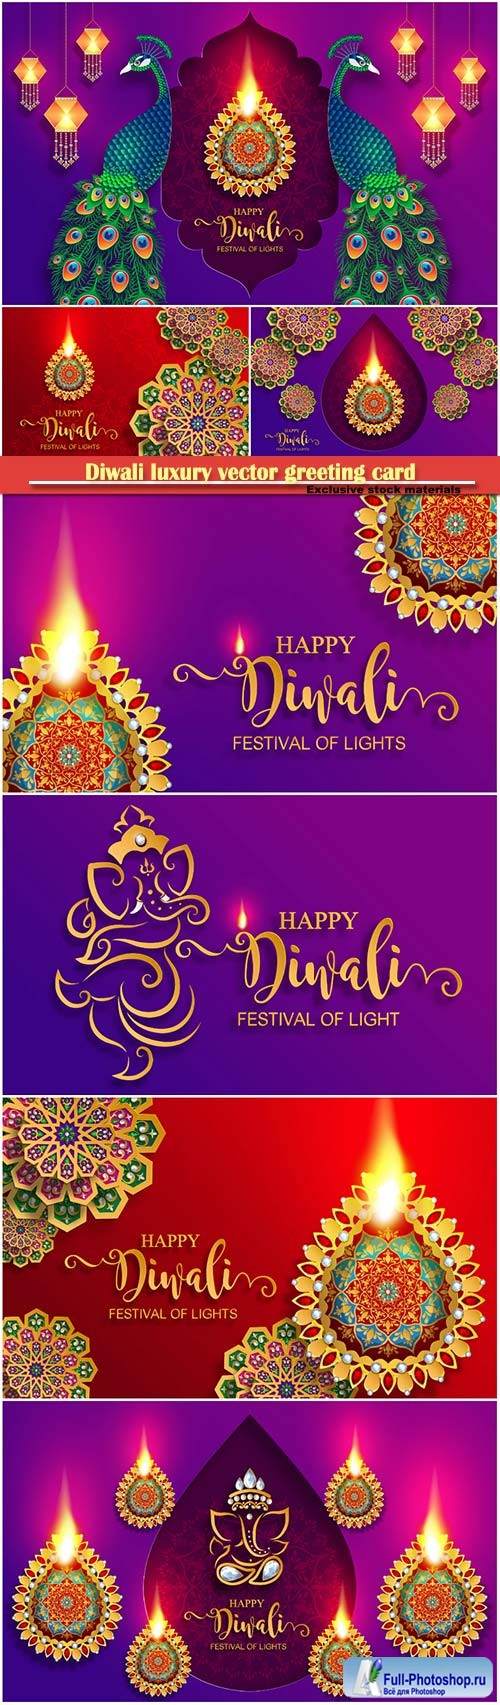 Diwali luxury vector greeting card # 3